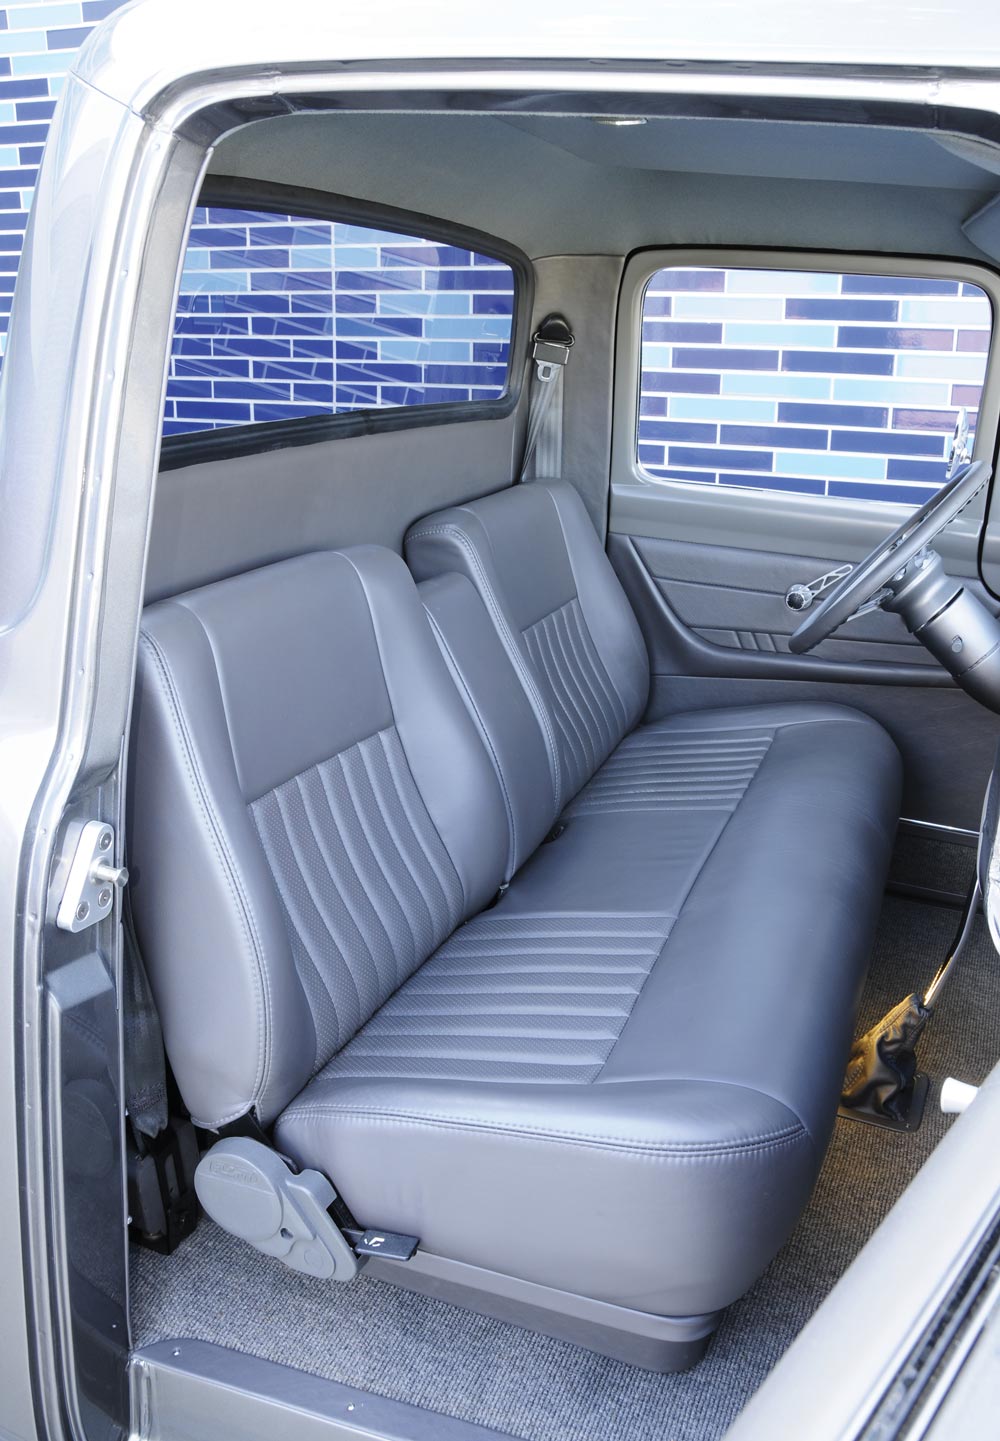 Ford F 100's interior seats